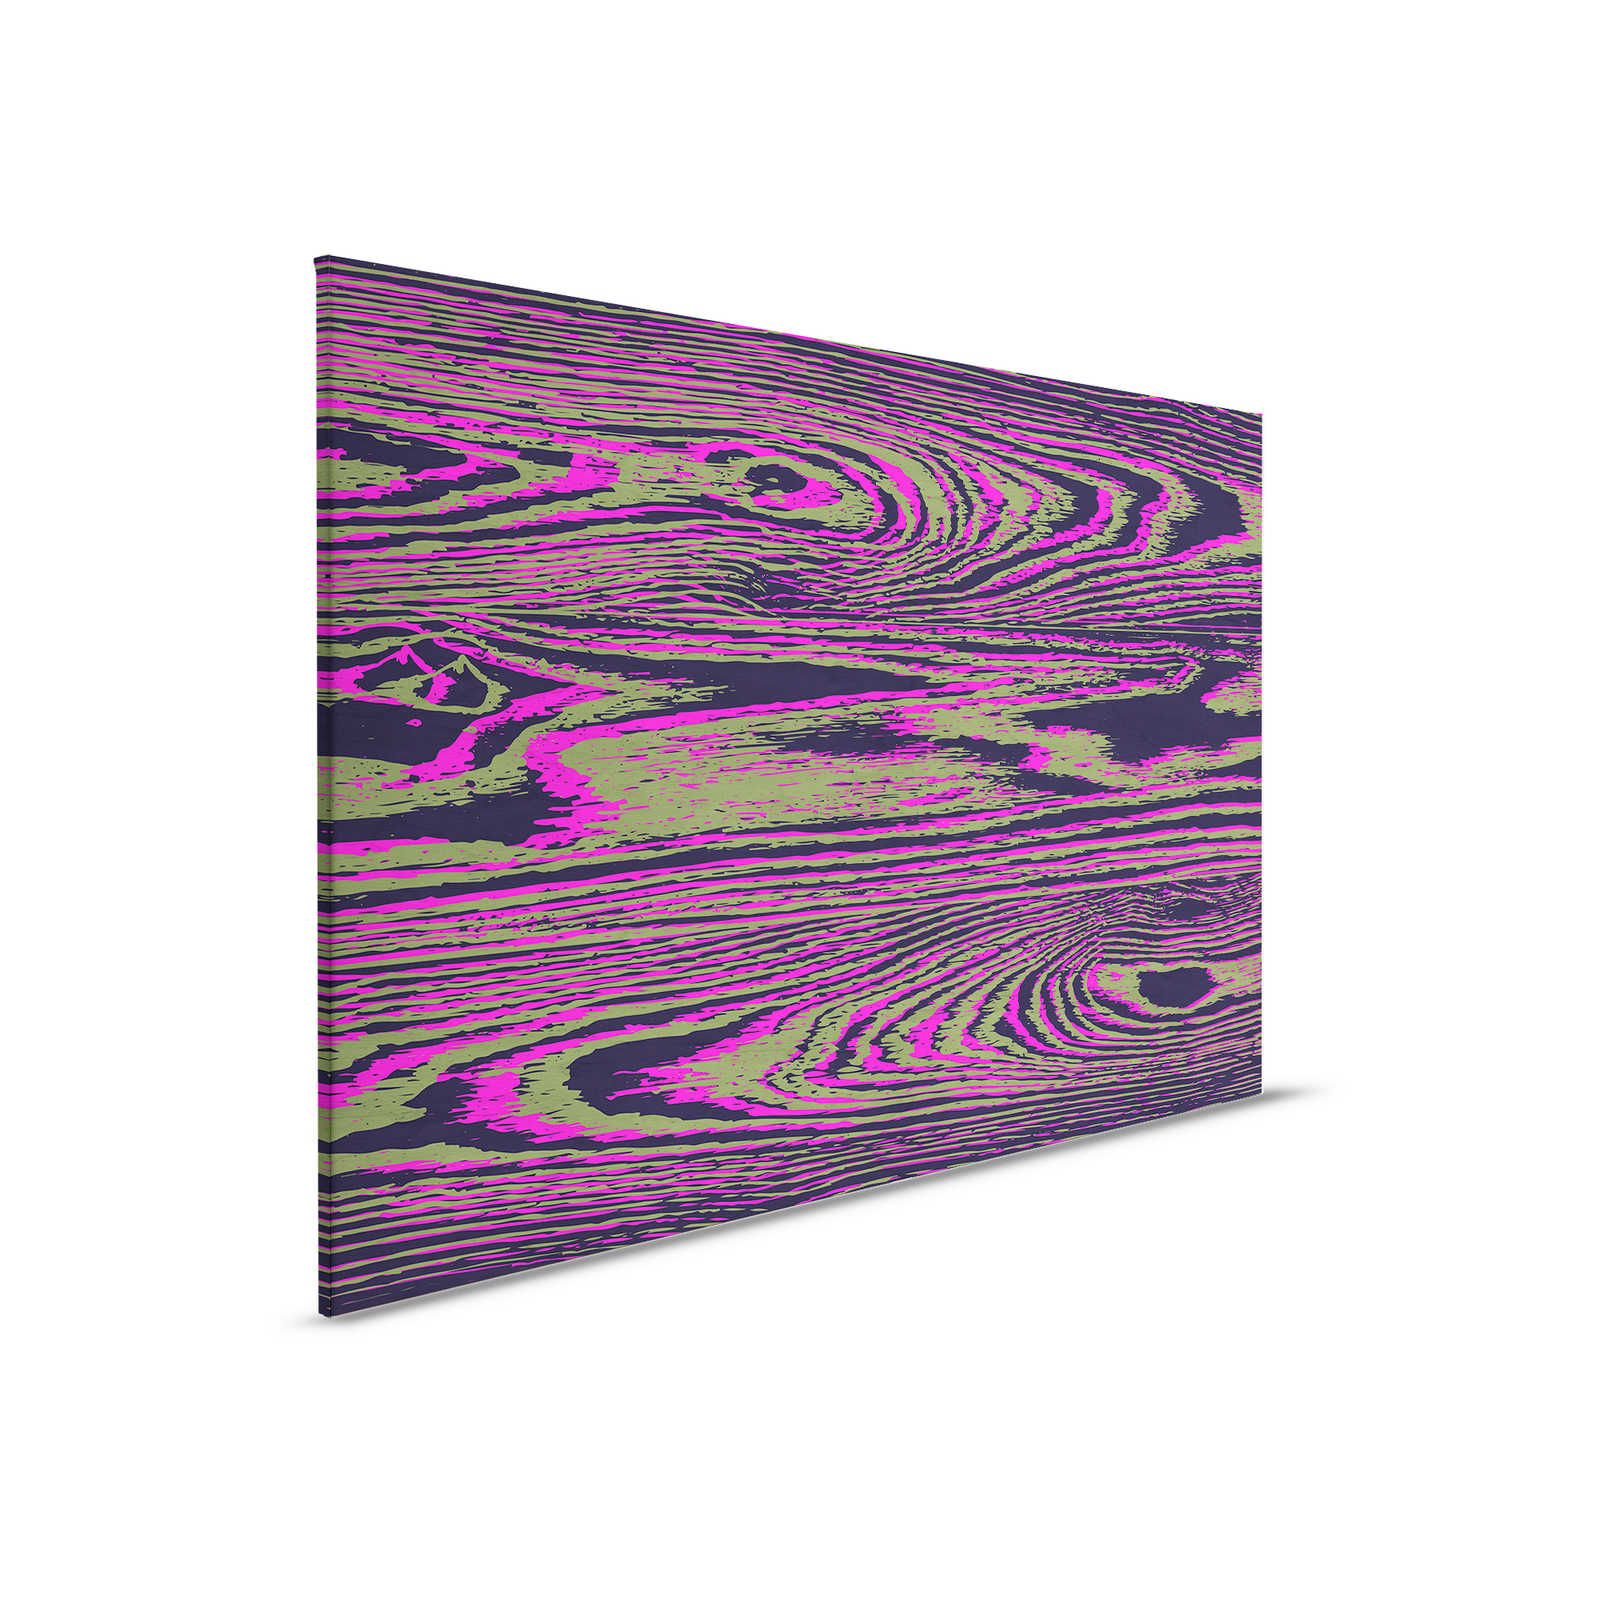         Kontiki 2 - Leinwandbild Neonfarbene Holzmaserung, Pink & Schwarz – 0,90 m x 0,60 m
    